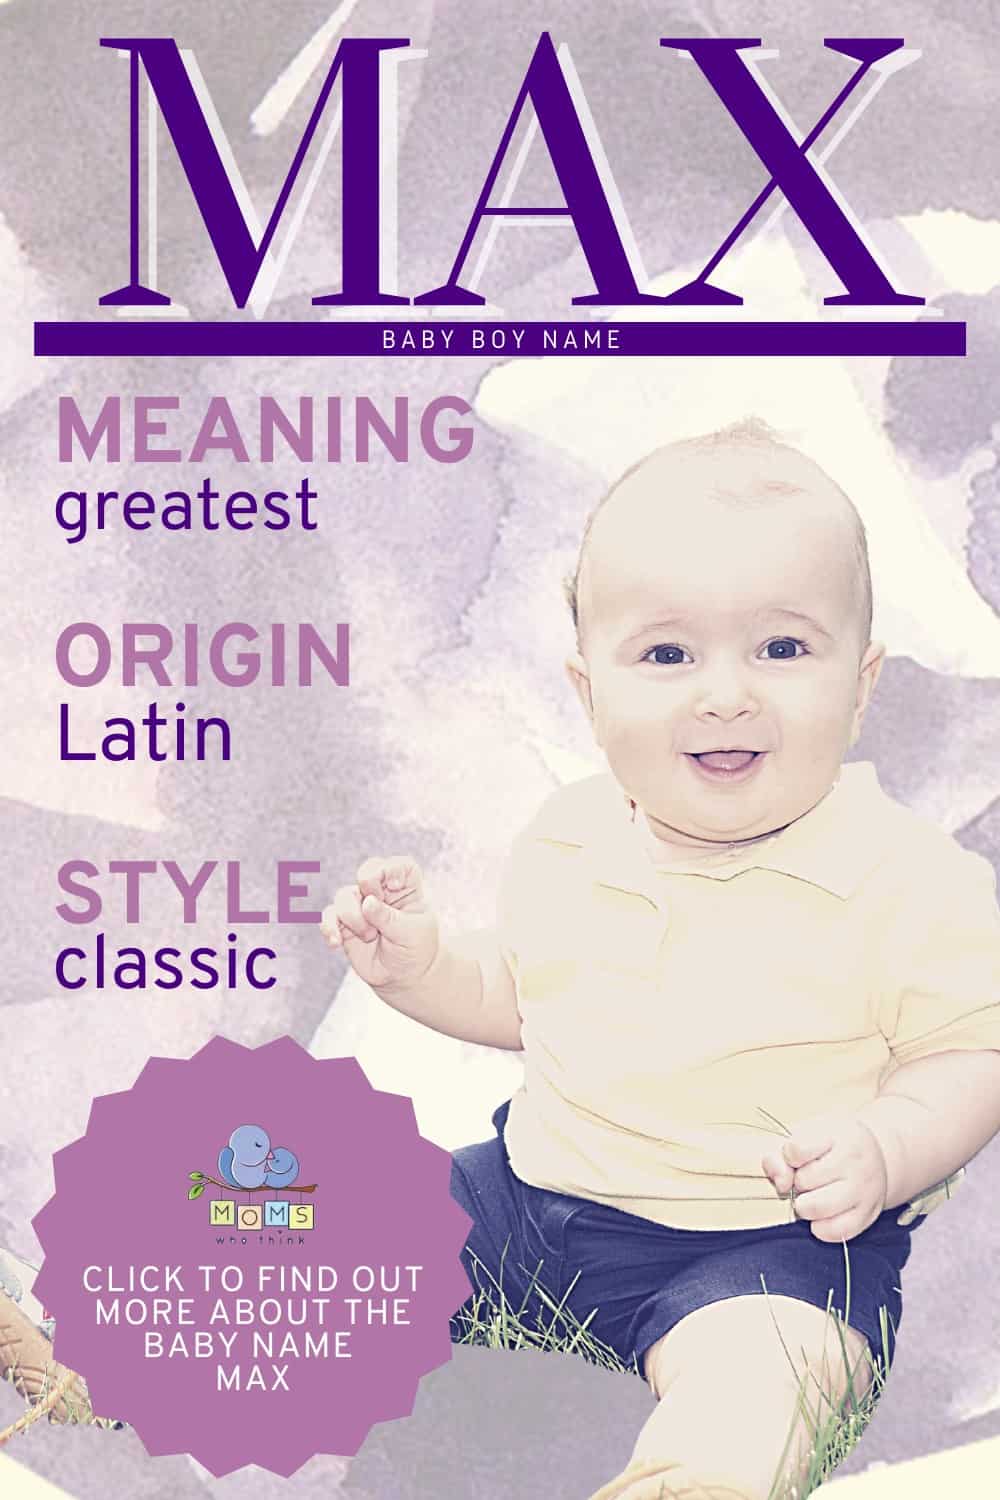 Baby name Max